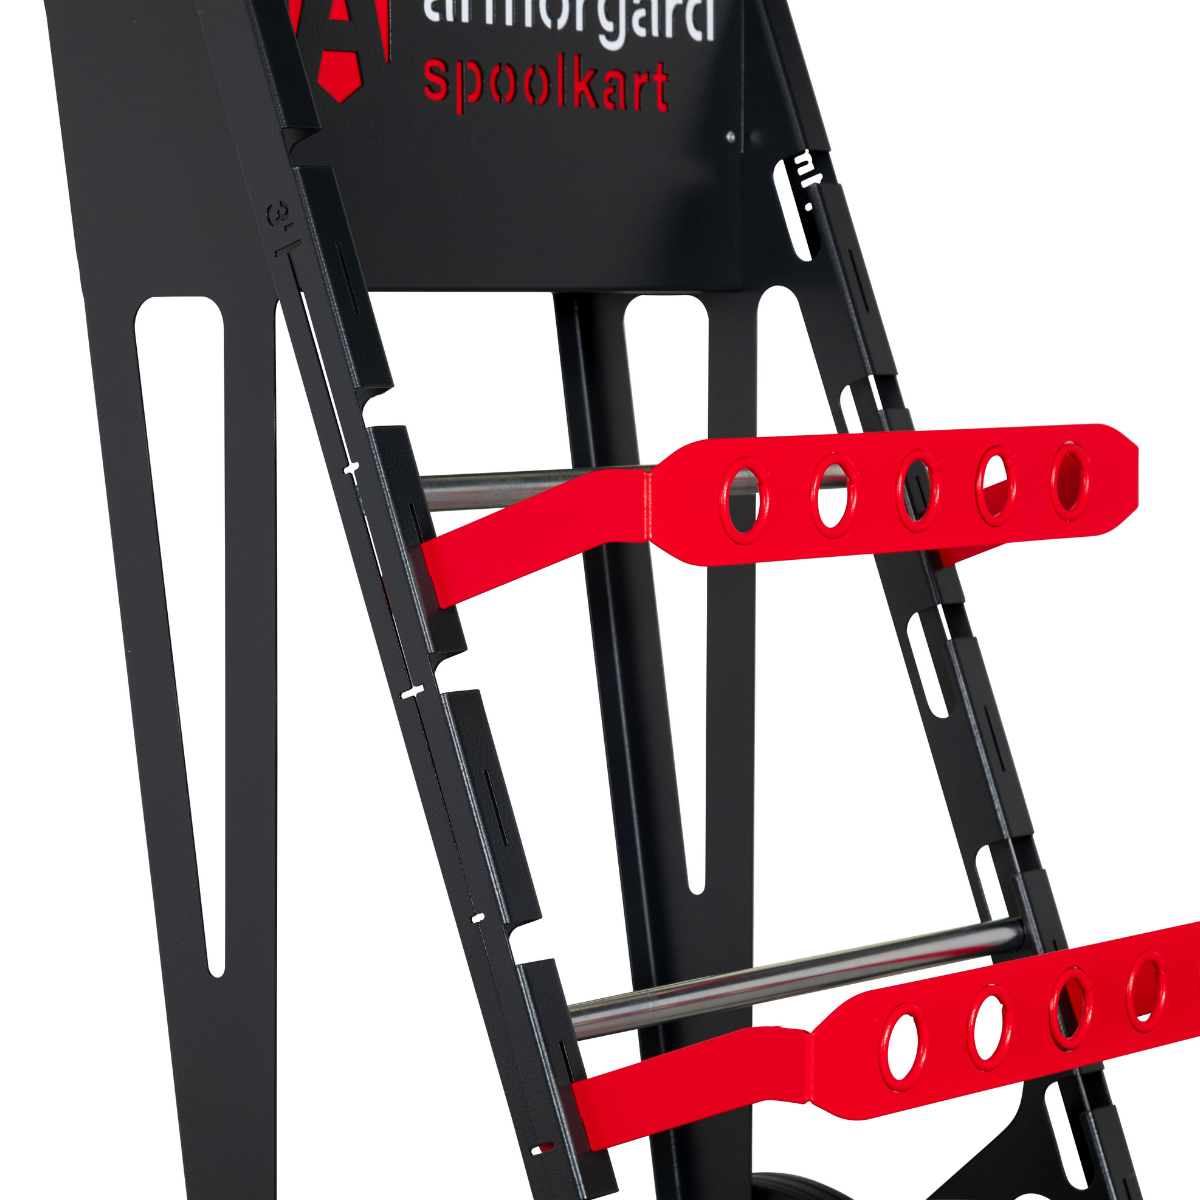 Armorgard SPK2 Spoolkart Mobile Cable Reel Cart 740x840x1365mm